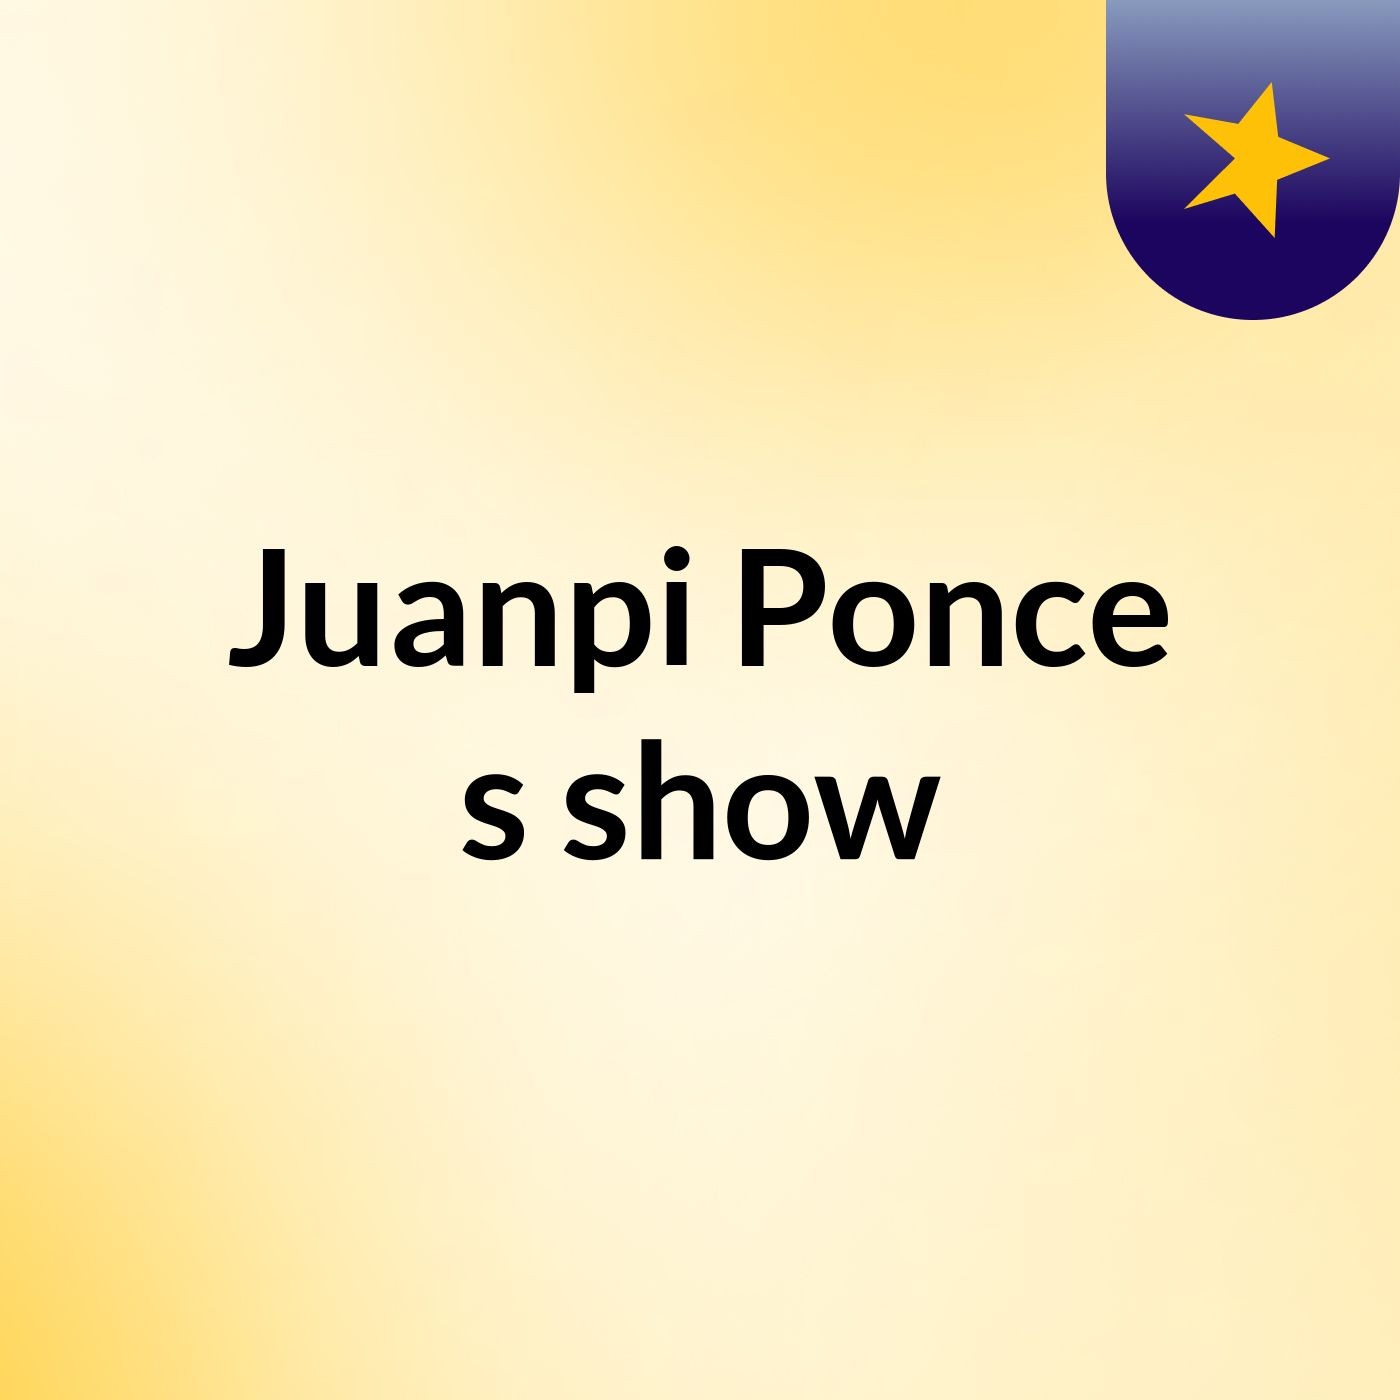 Juanpi Ponce's show